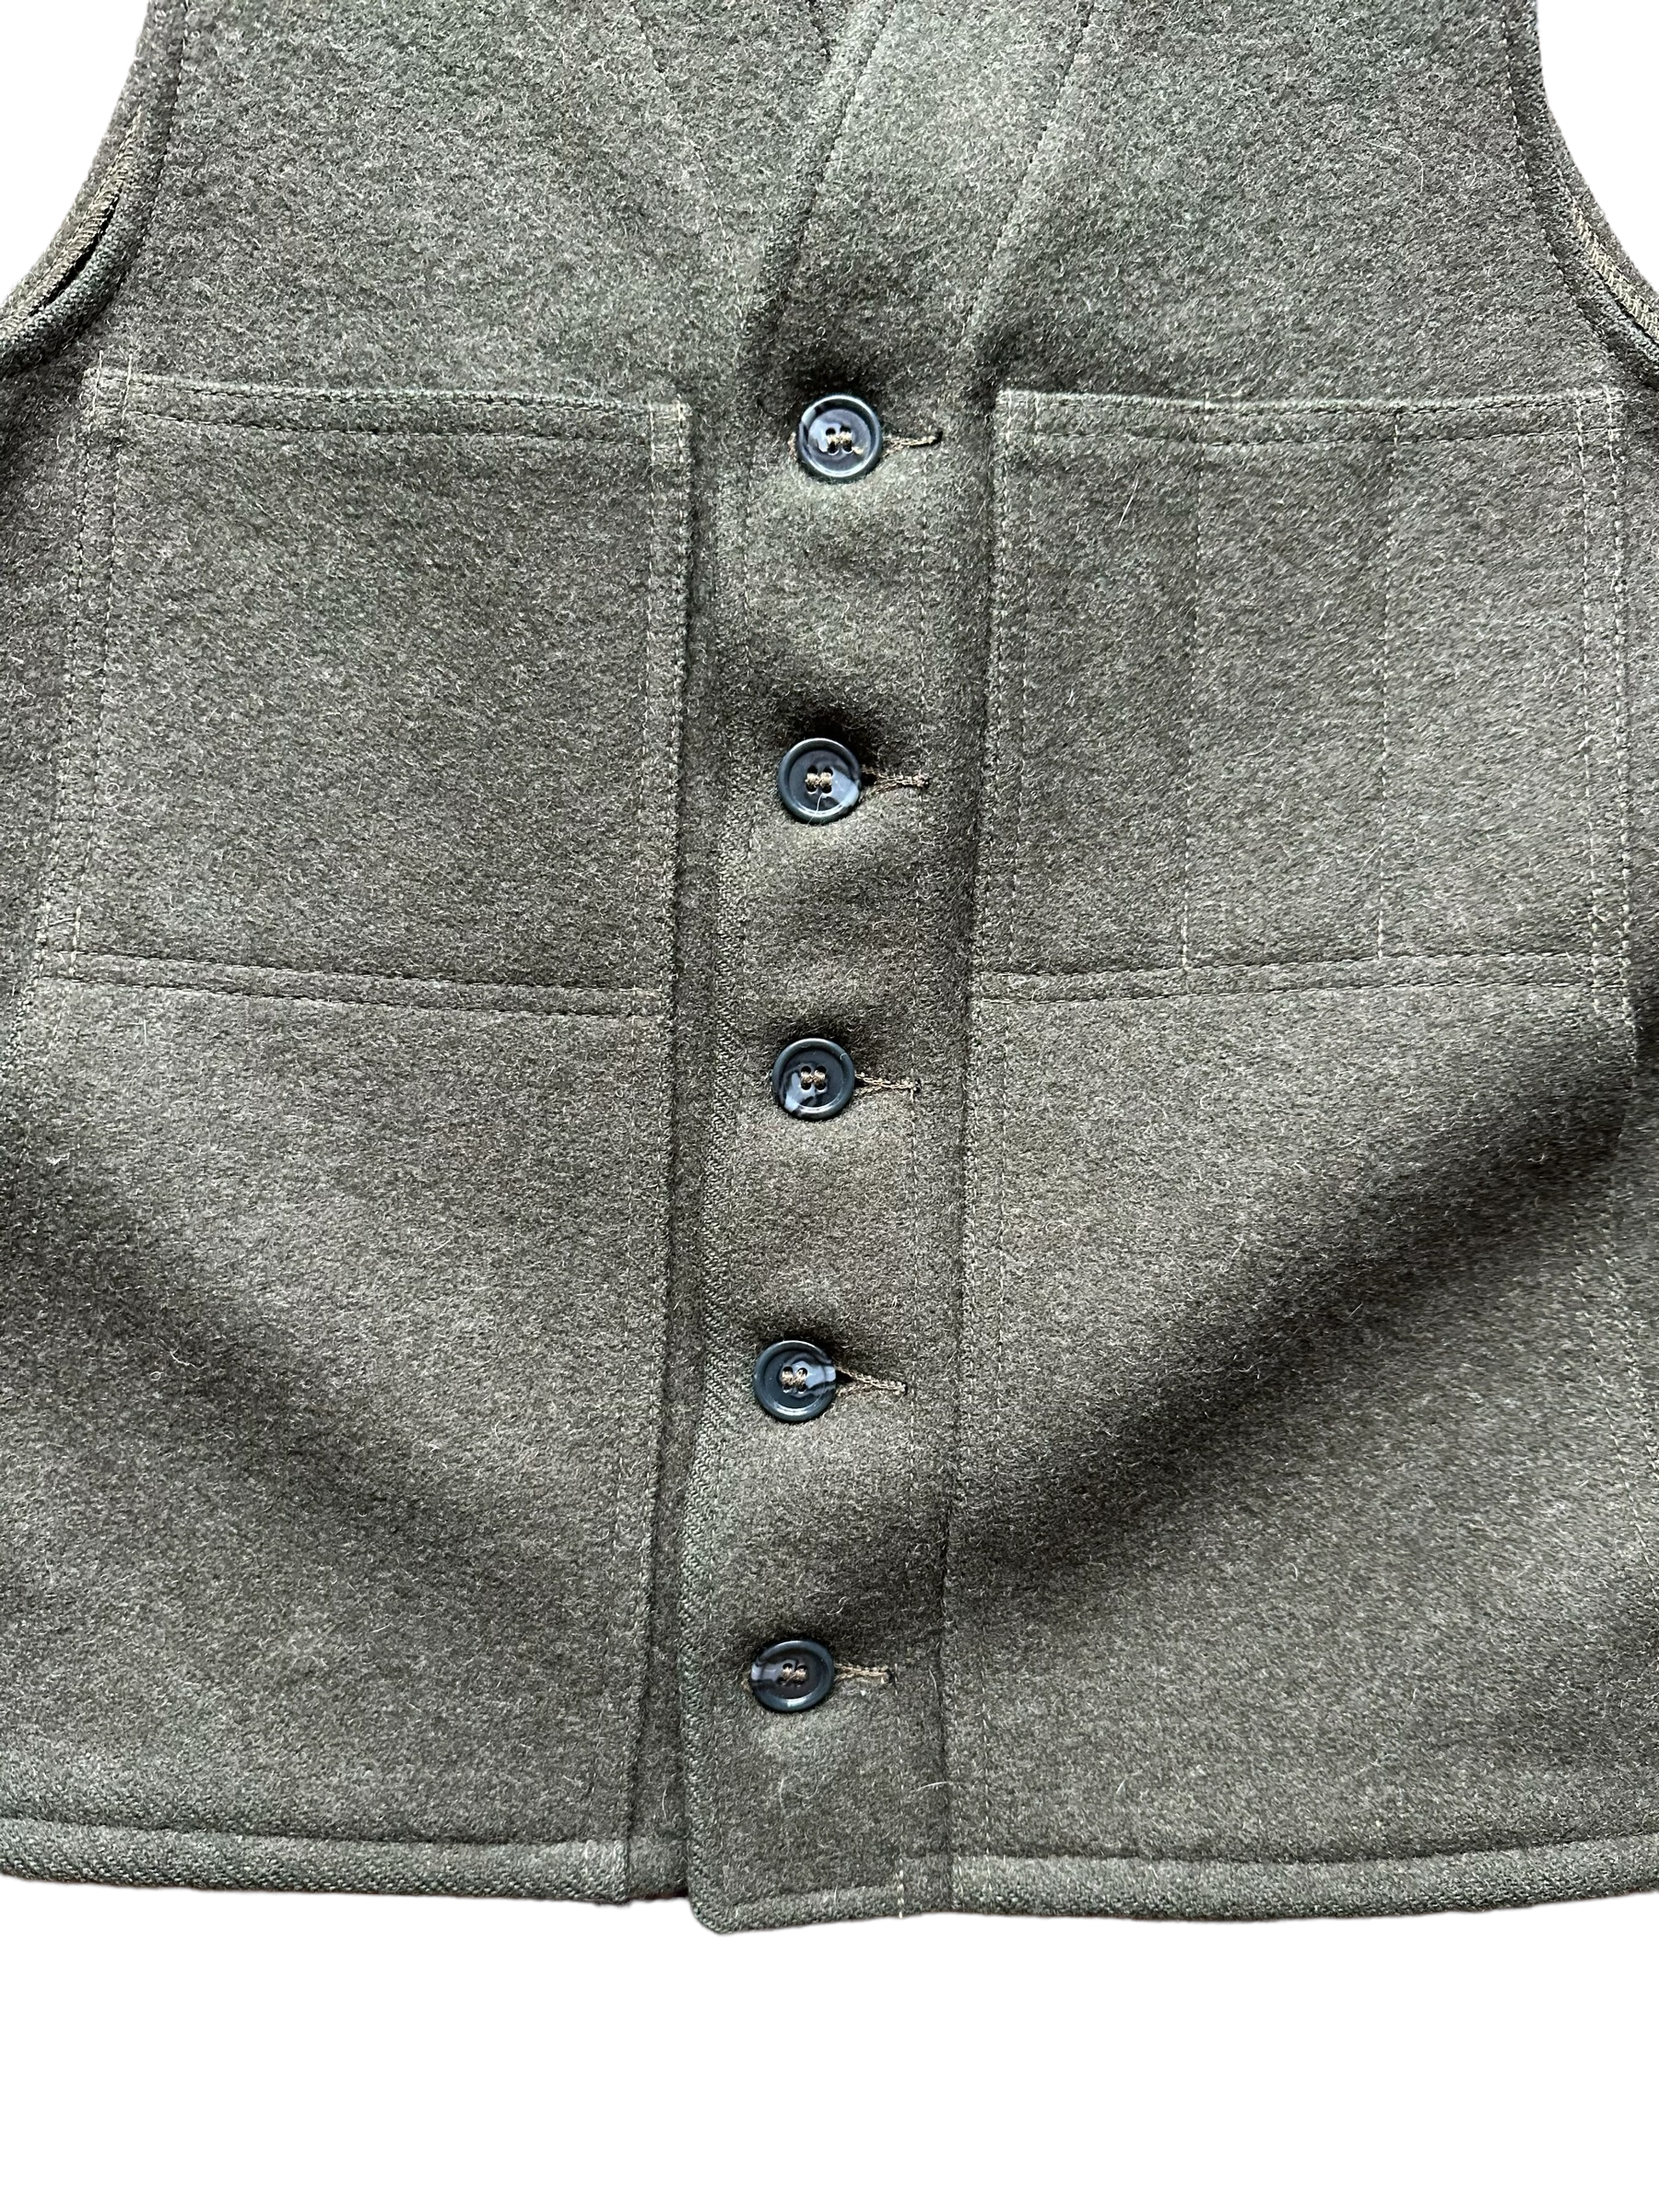 Front Lower View of Vintage Filson Mackinaw Vest SZ 36 |  Forest Green Wool Vest | Seattle Vintage Workwear